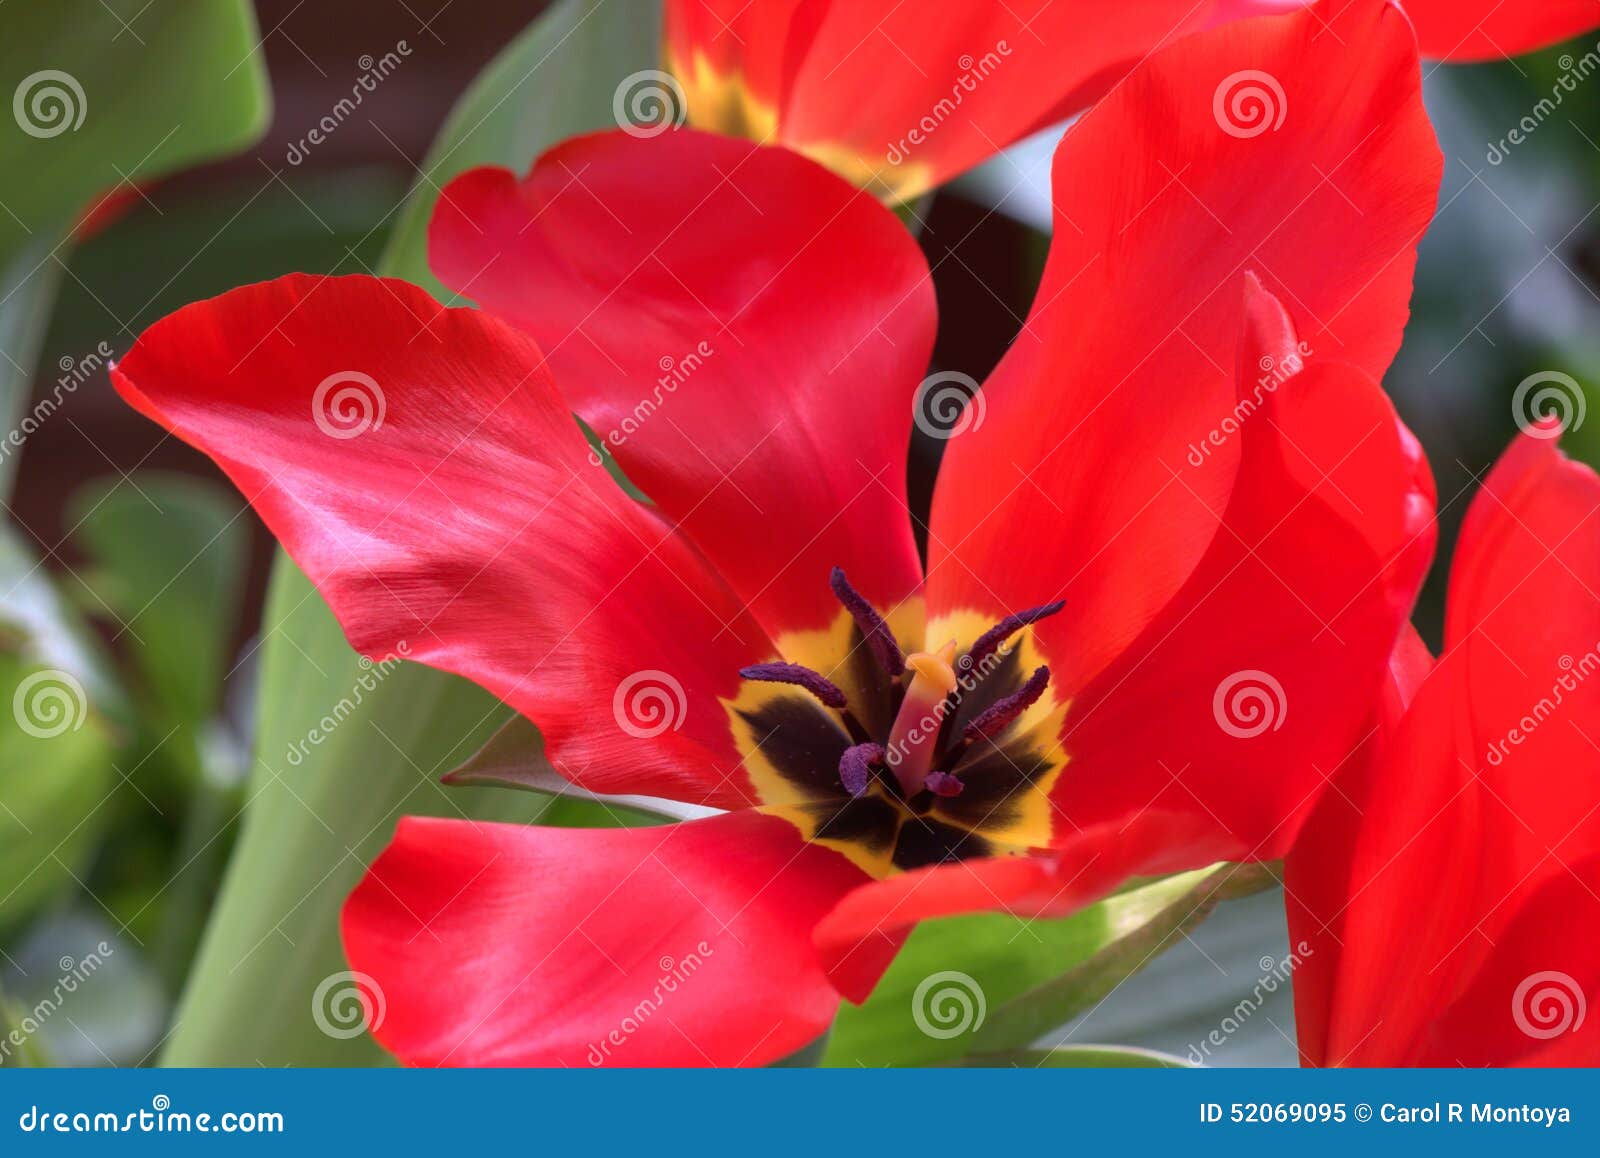 Tulipa vermelha aberta II imagem de stock. Imagem de hermafrodita - 52069095